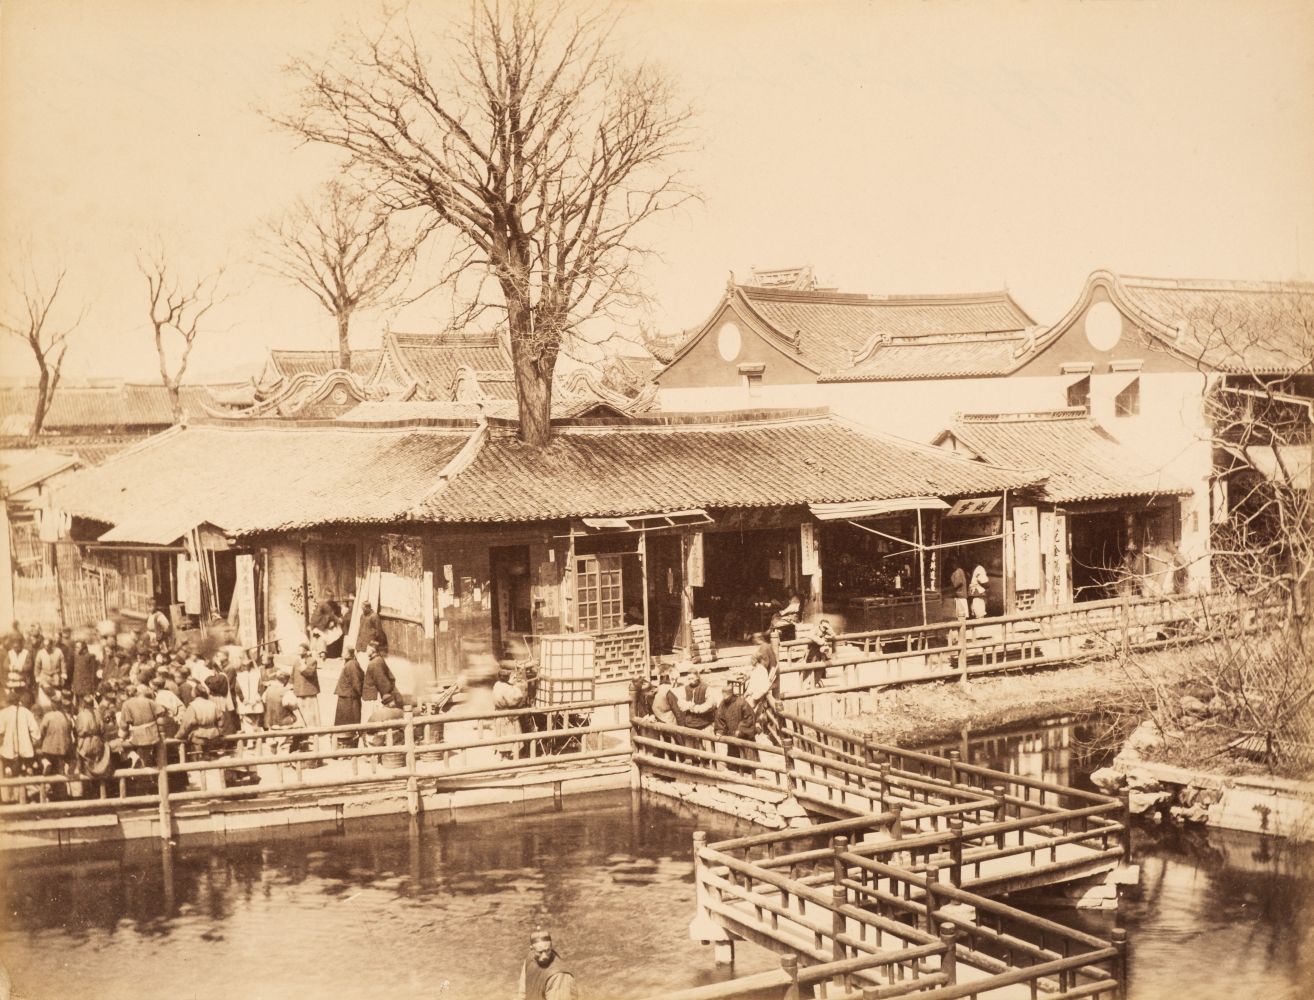 China. Zig Zag Bridge in front of Woo Sing Ding Tea House, Shanghai, c. 1870